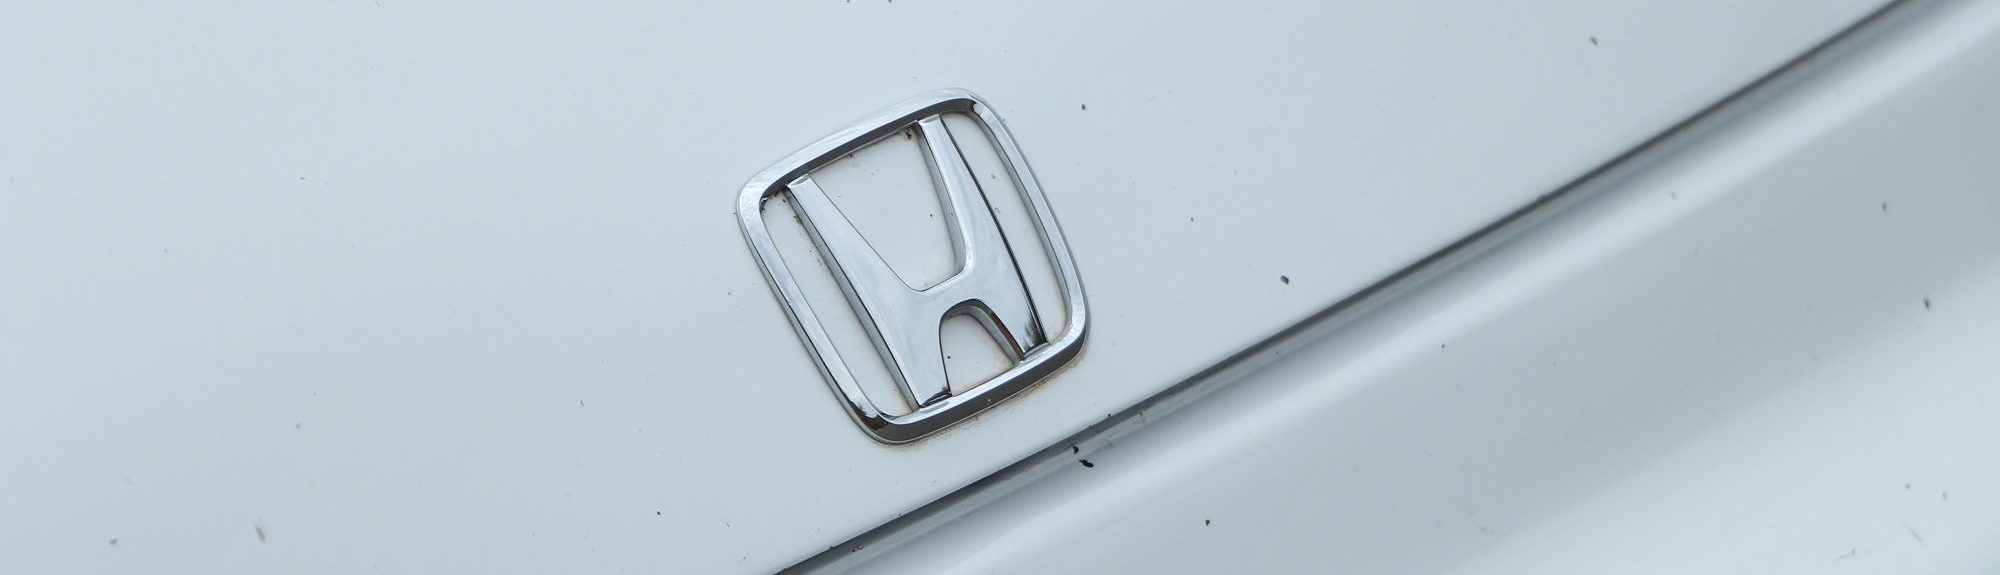 Honda-tech.com Golden Era Honda Integra Type R Honda Civic EG B18C B18C1 Swap Review Drive